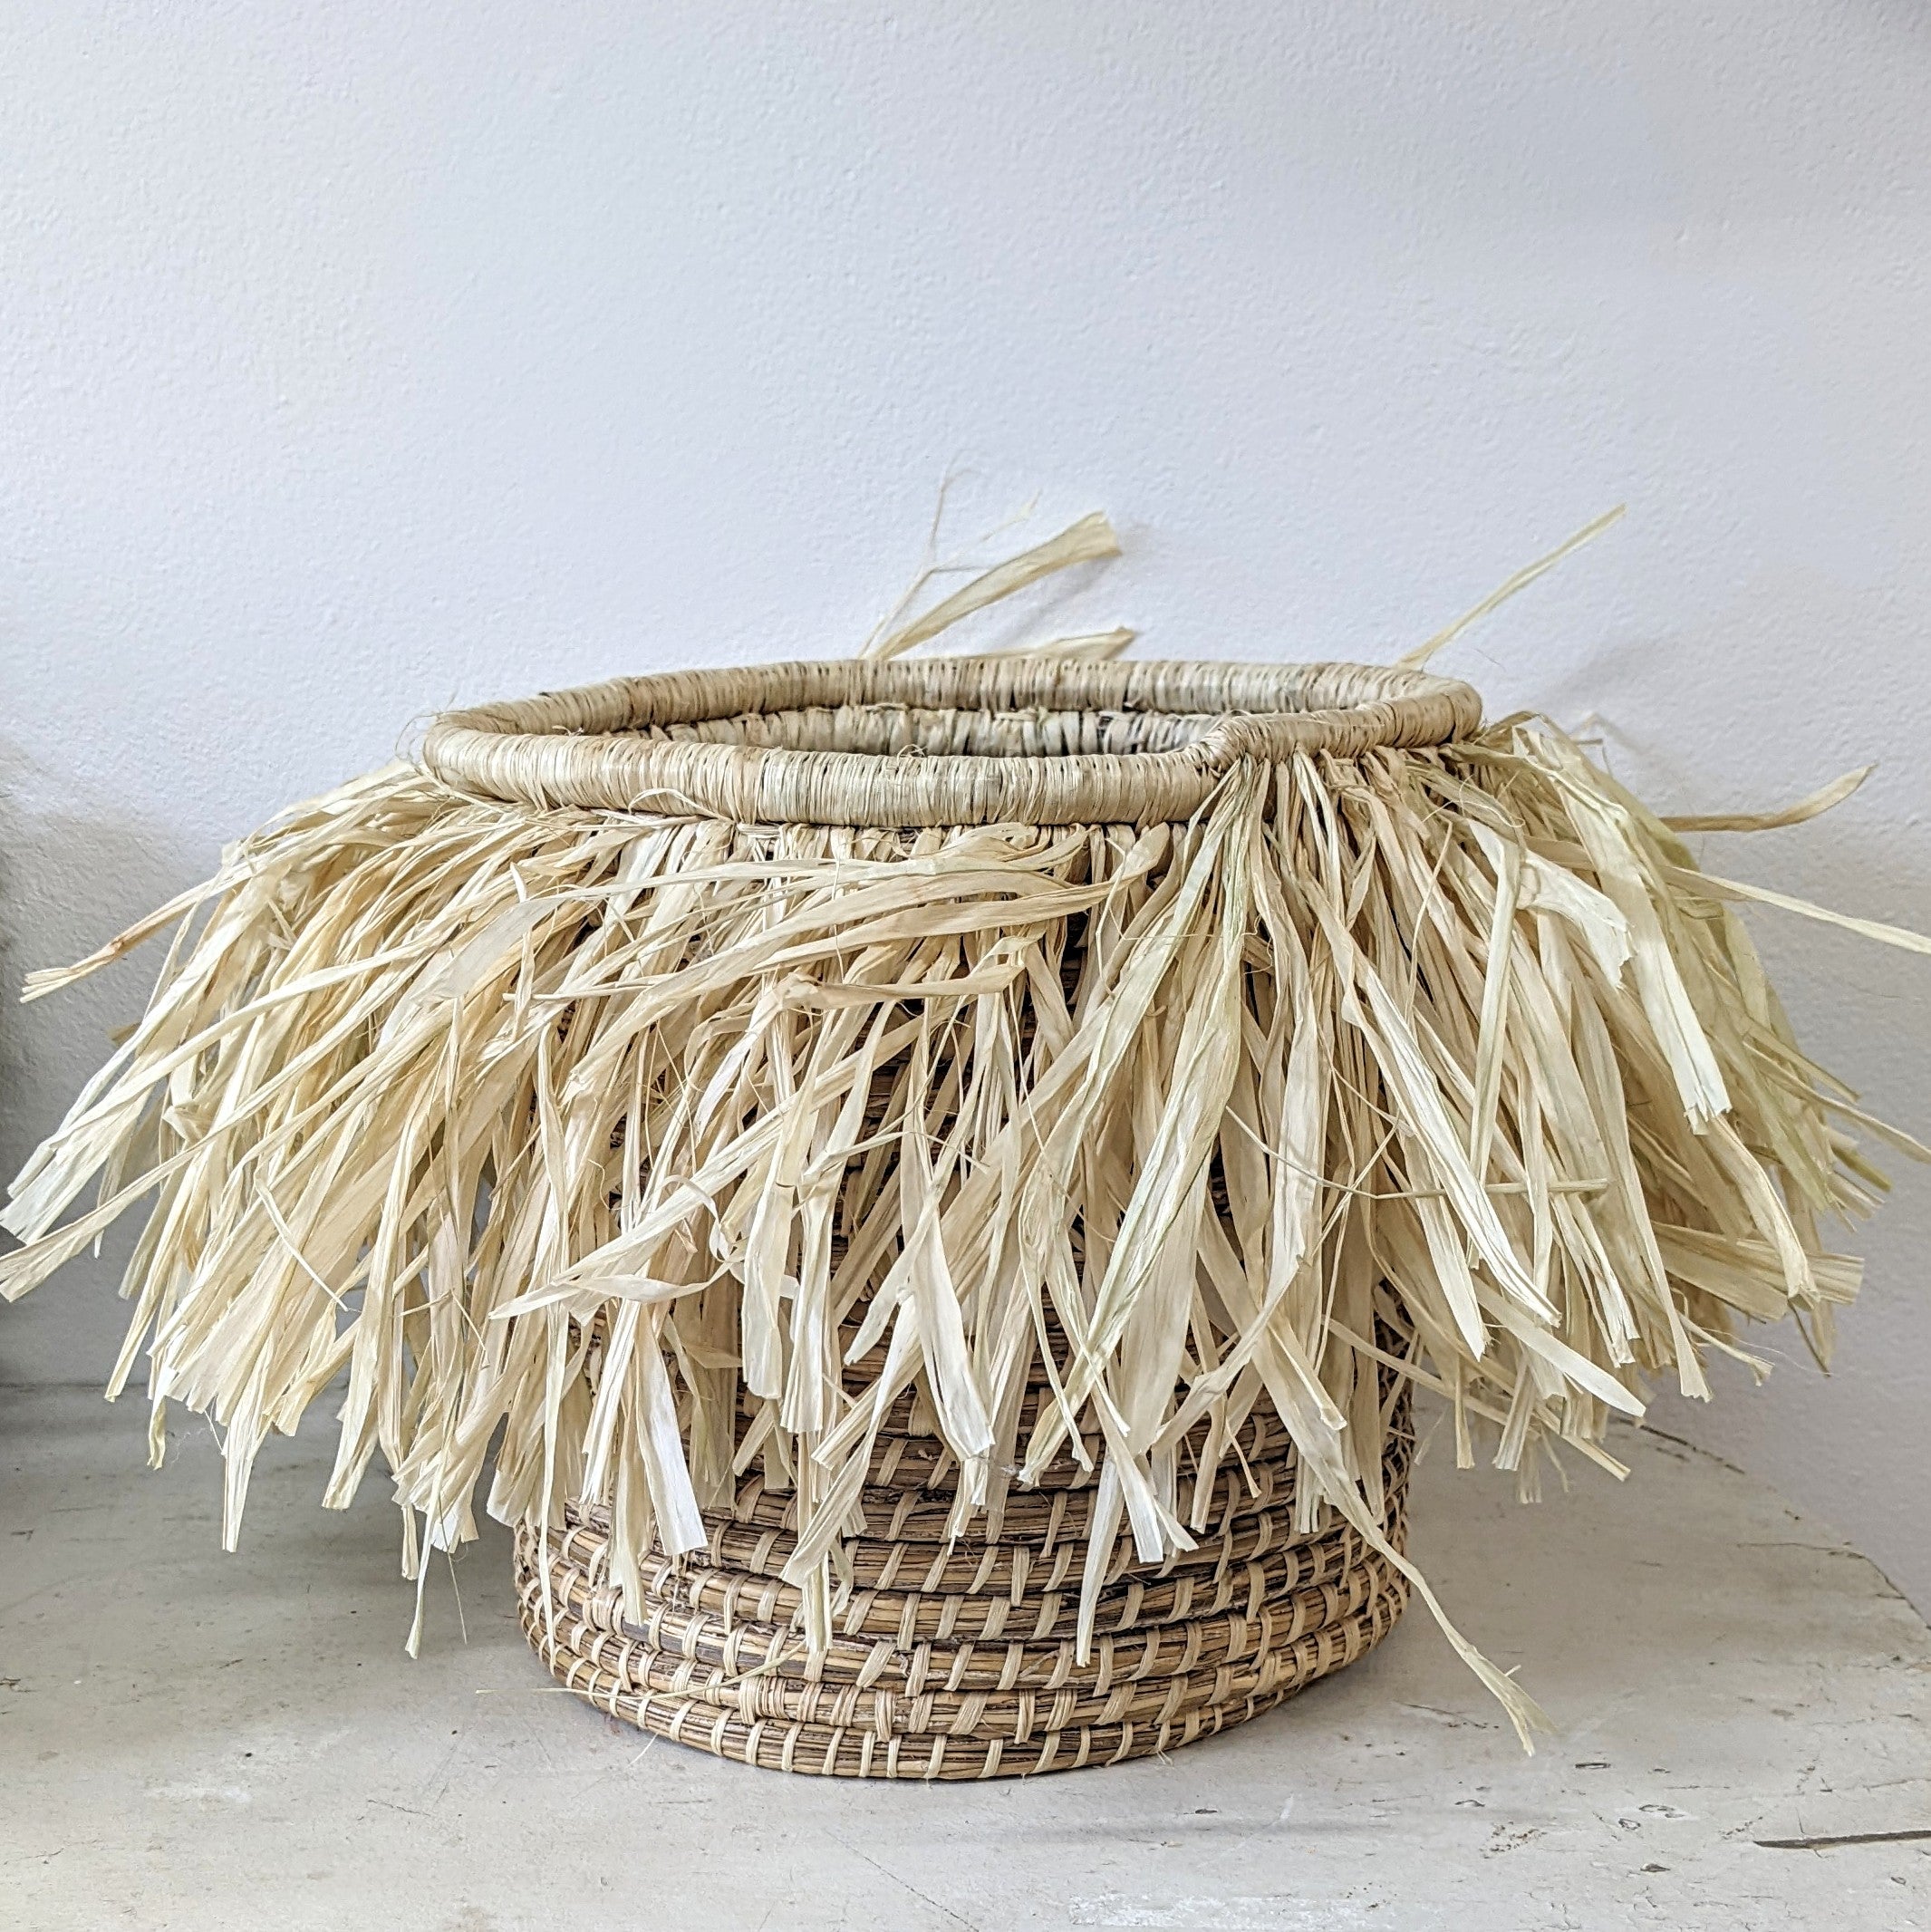 JustOne's medium tan basket with tan fringe surrounding the basket, handwoven in Uganda